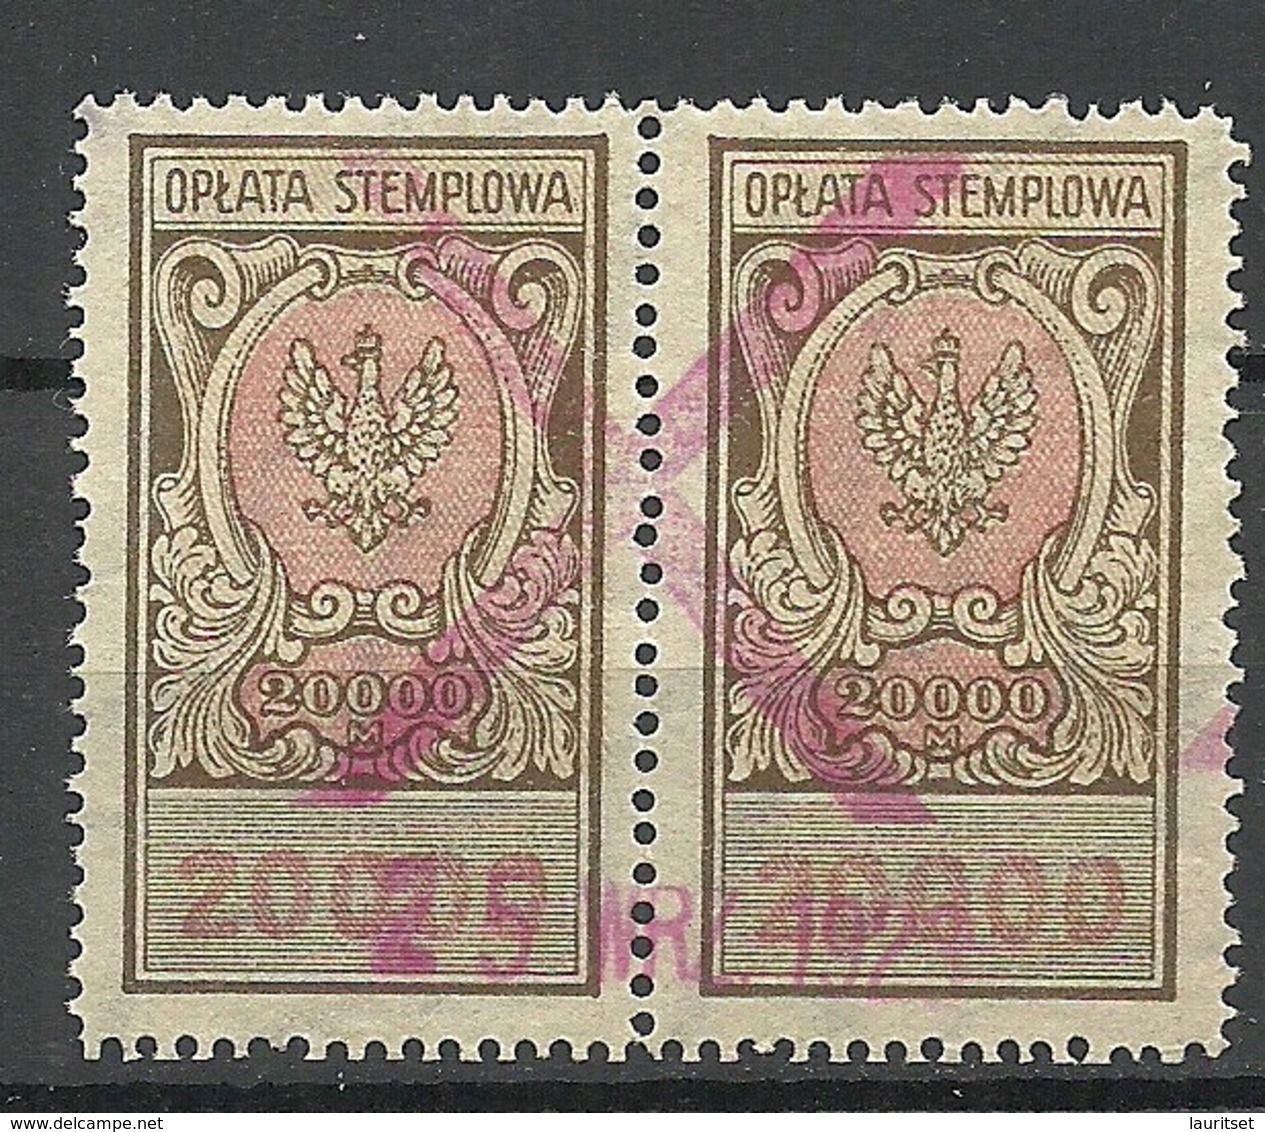 POLEN Poland O 1929 Stempelmarke Documentary Tax Oplata 20 000 As Pair O - Steuermarken